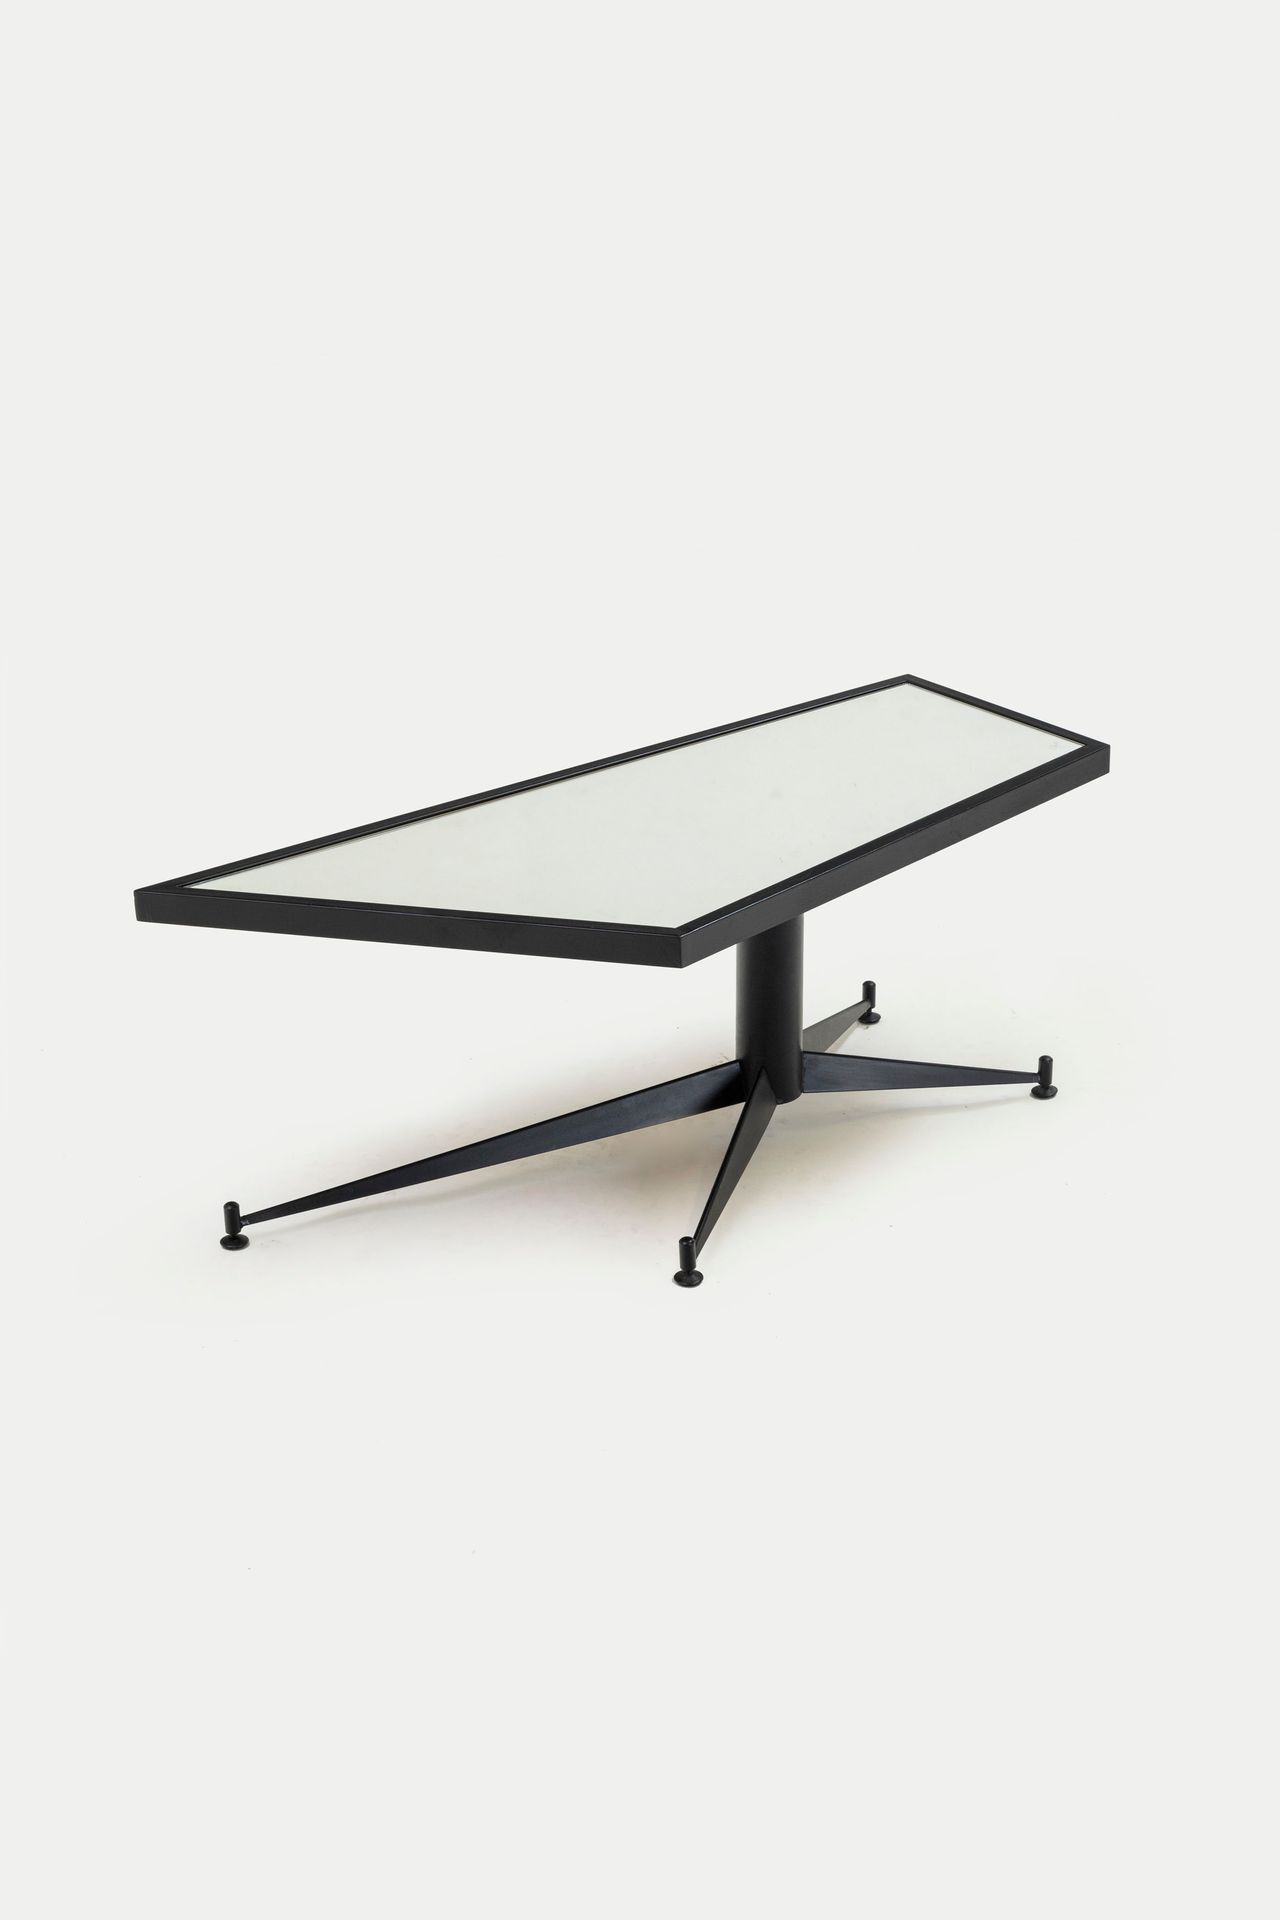 GIO PONTI (ATTRIB. A) 矮桌。油漆金属，镜面玻璃，黄铜。生产Rima 1955约。 
厘米42x104x46
属于G.Ponti的矮桌 

&hellip;